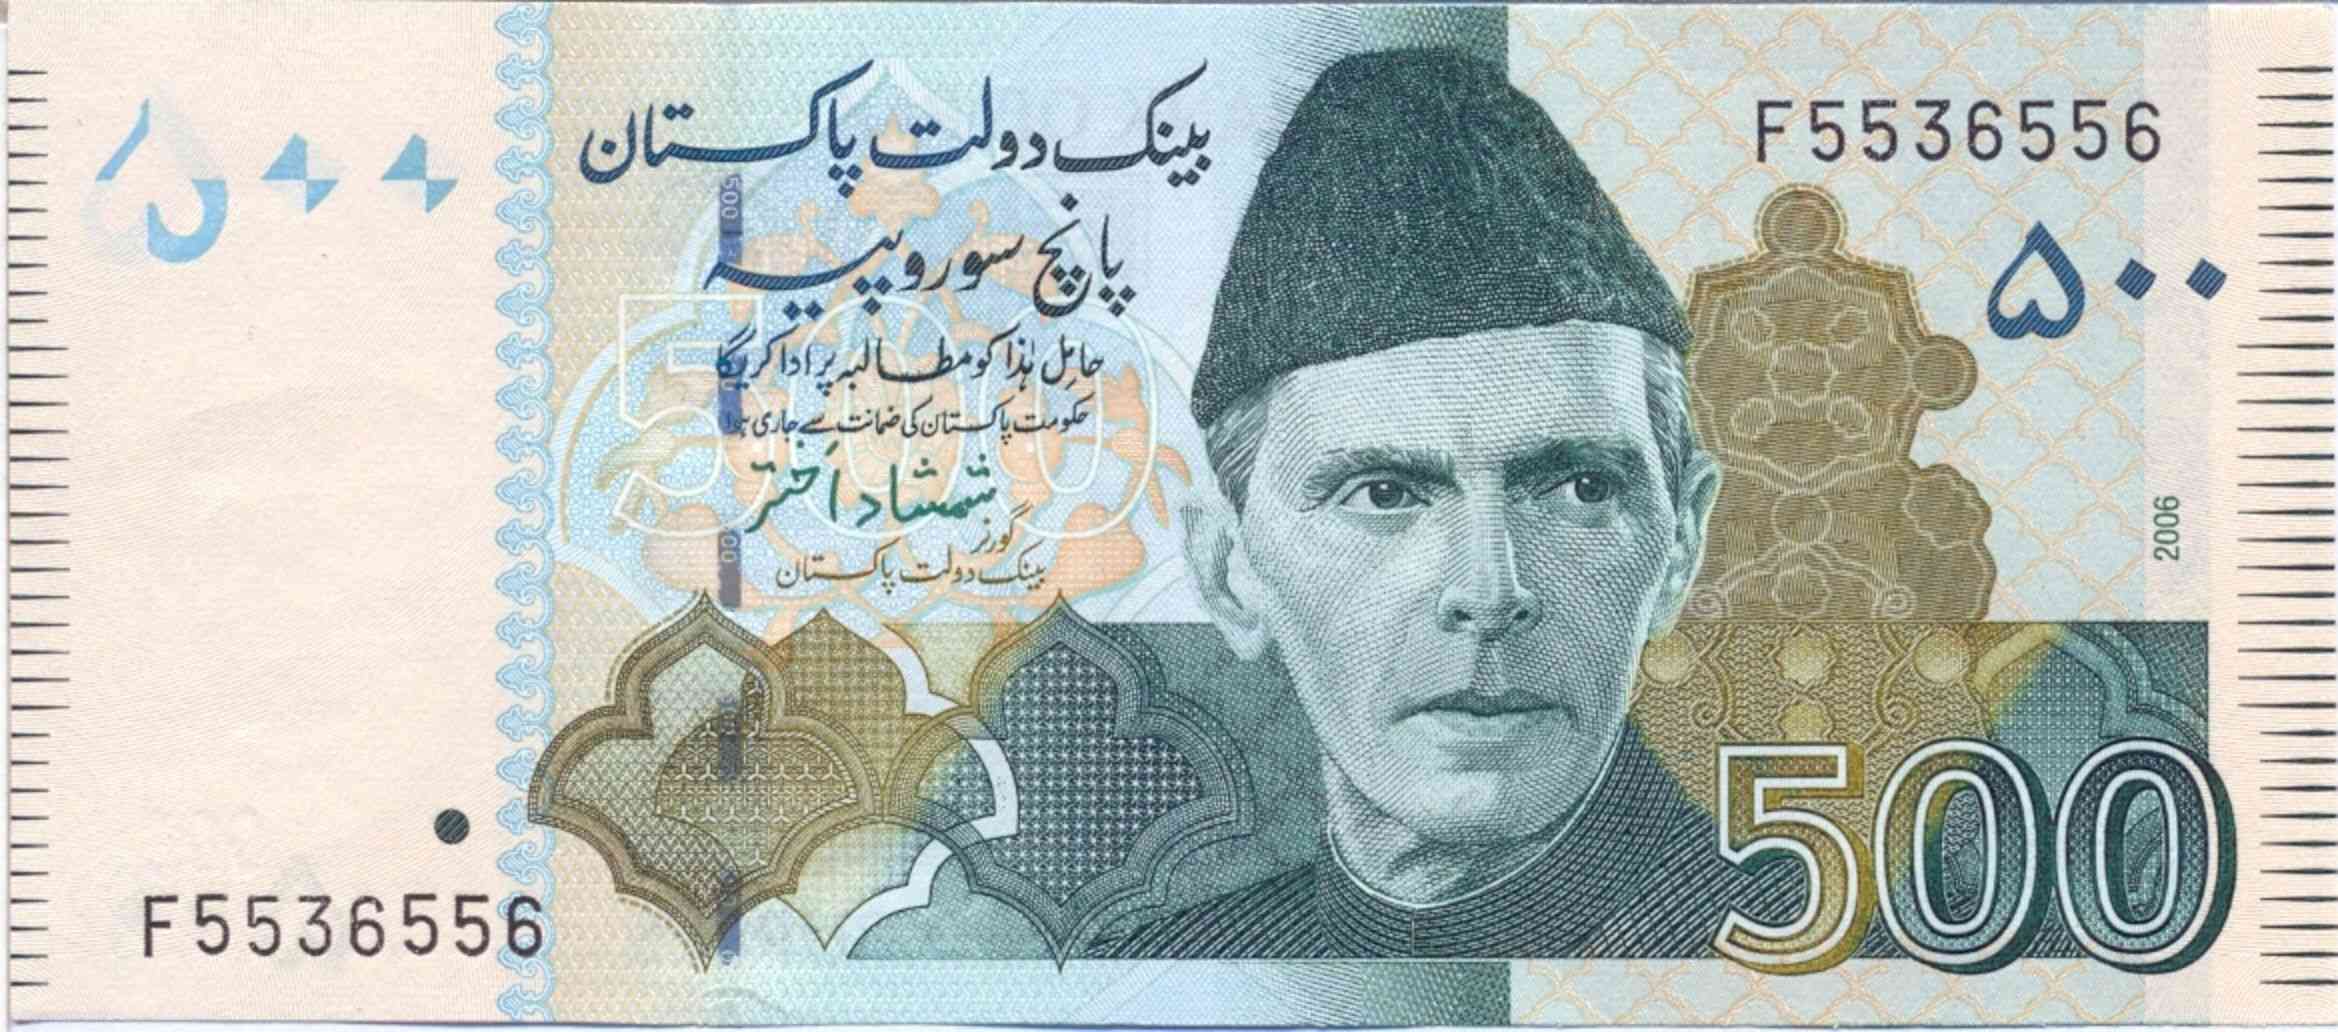 Pakistan 500 Rupees 2019 P-49A Low 4 Digit S/N Mohammad Jinnah Banknote Unc 